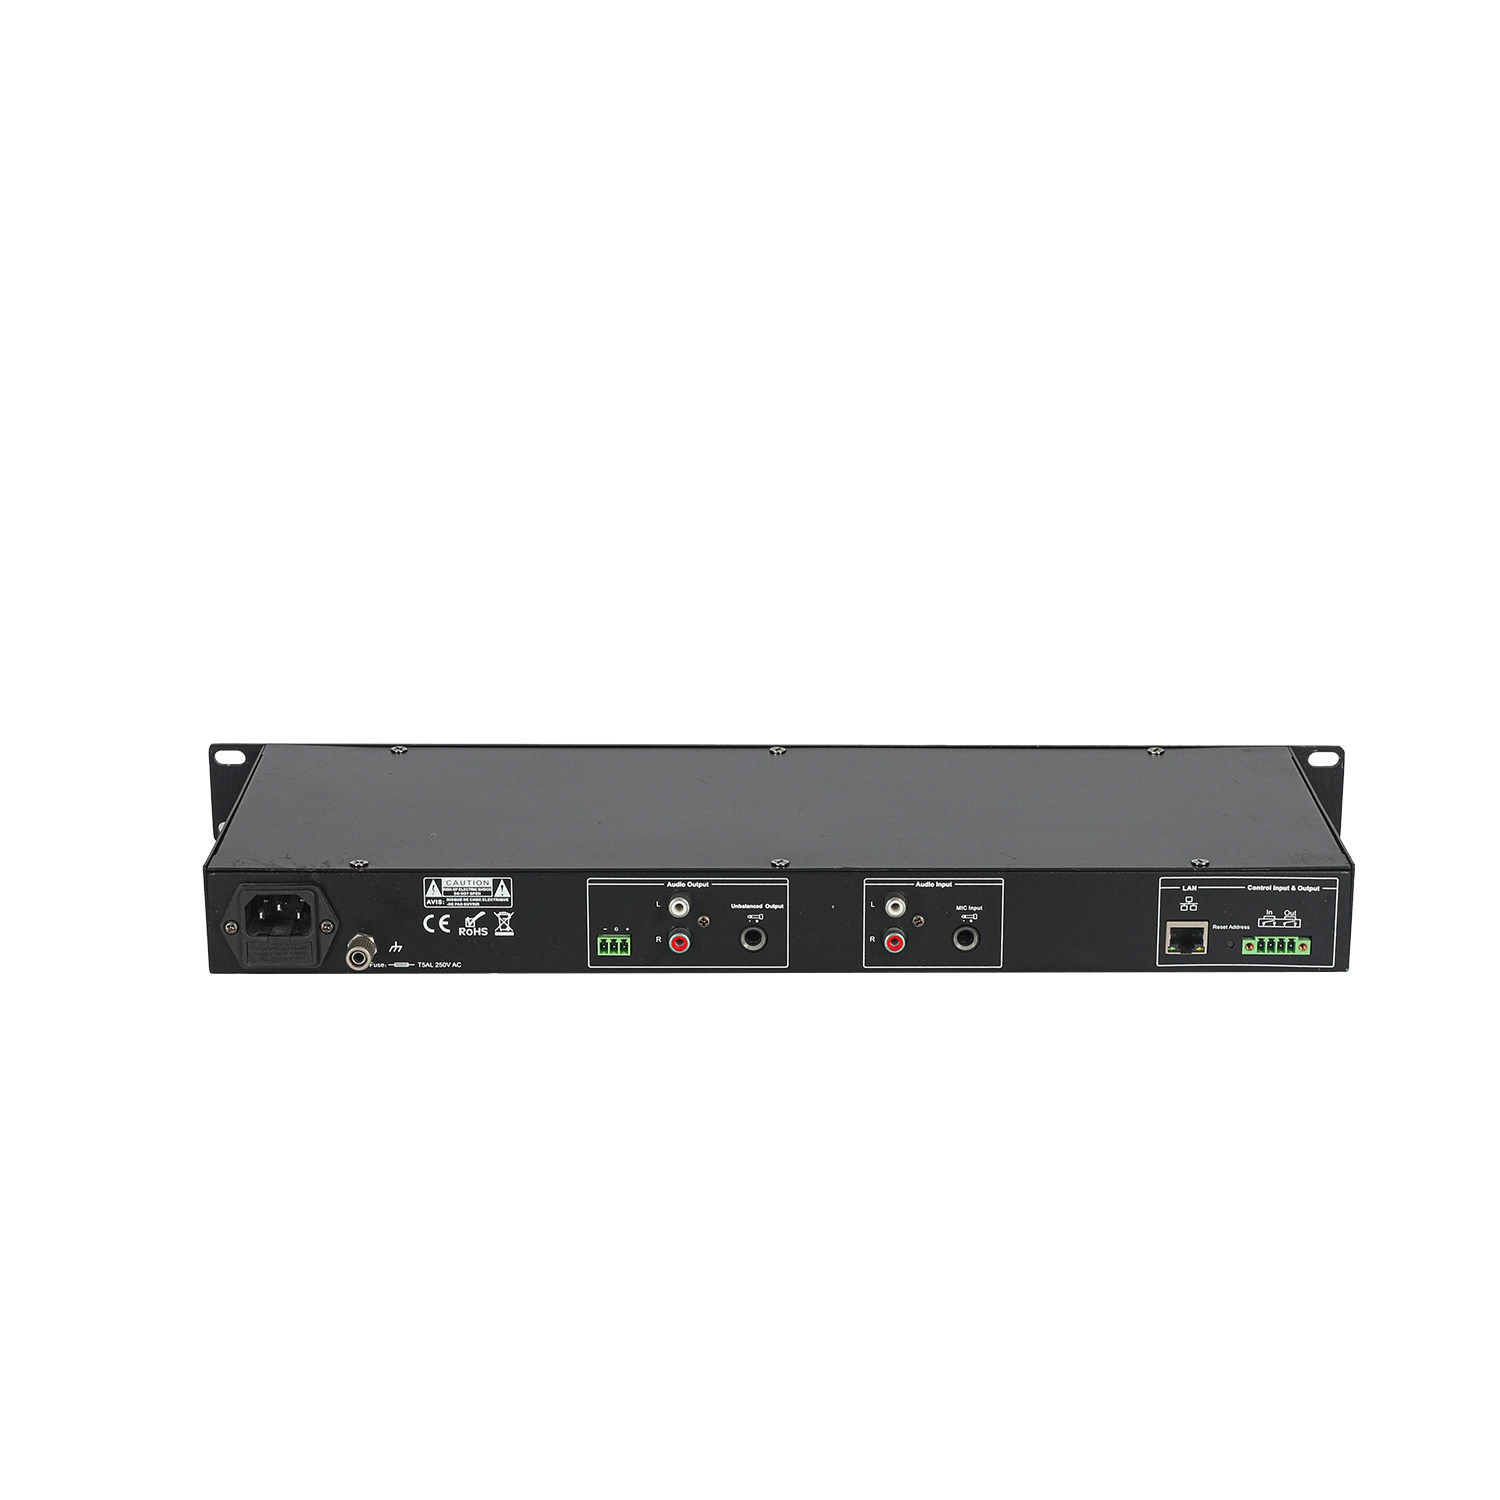 IP PA system decoder FIP-900DC